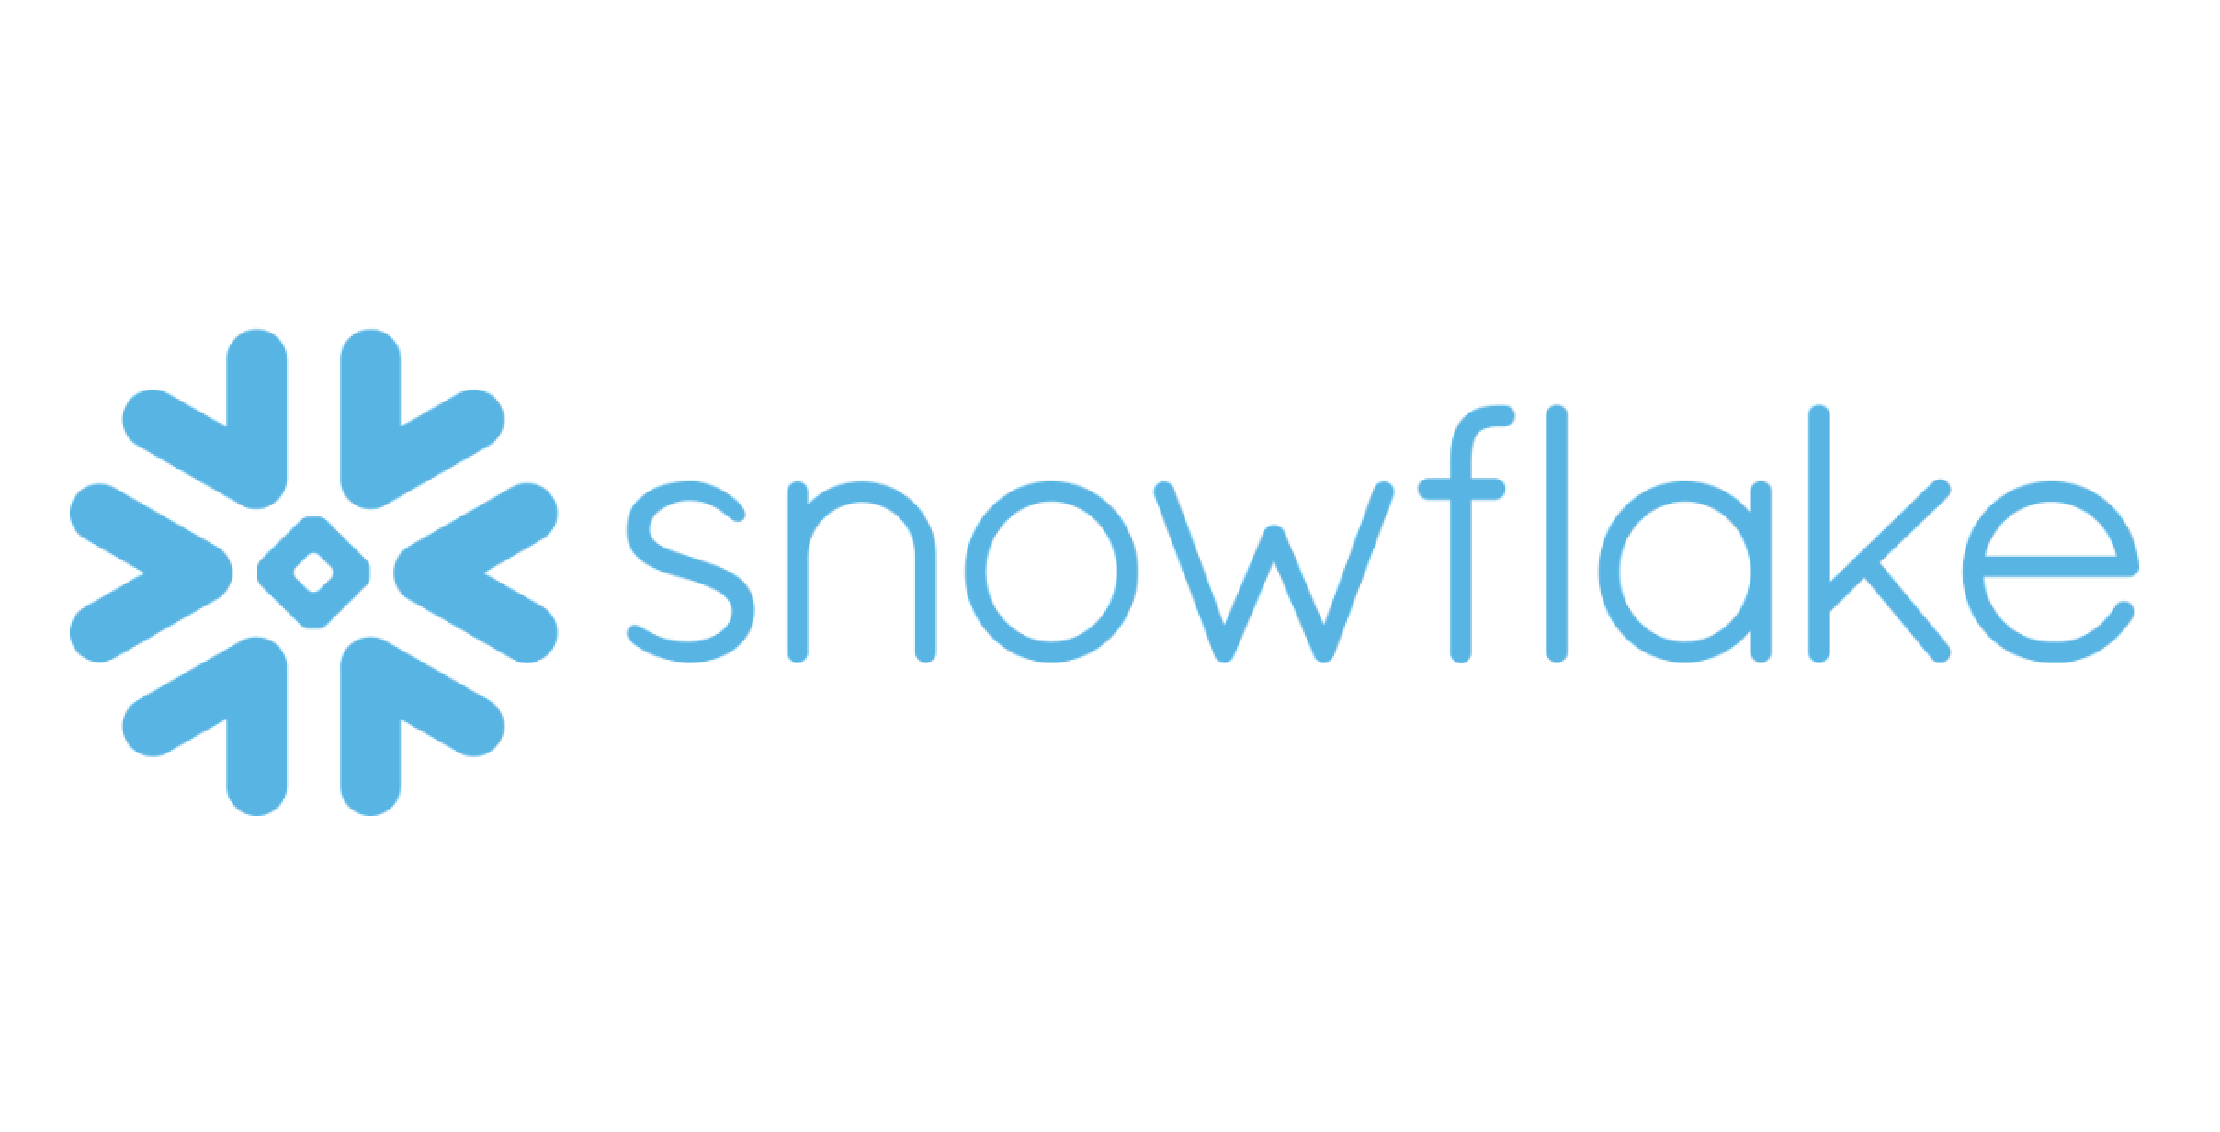 Thumbnail The Snowflake logo (a snowflake)